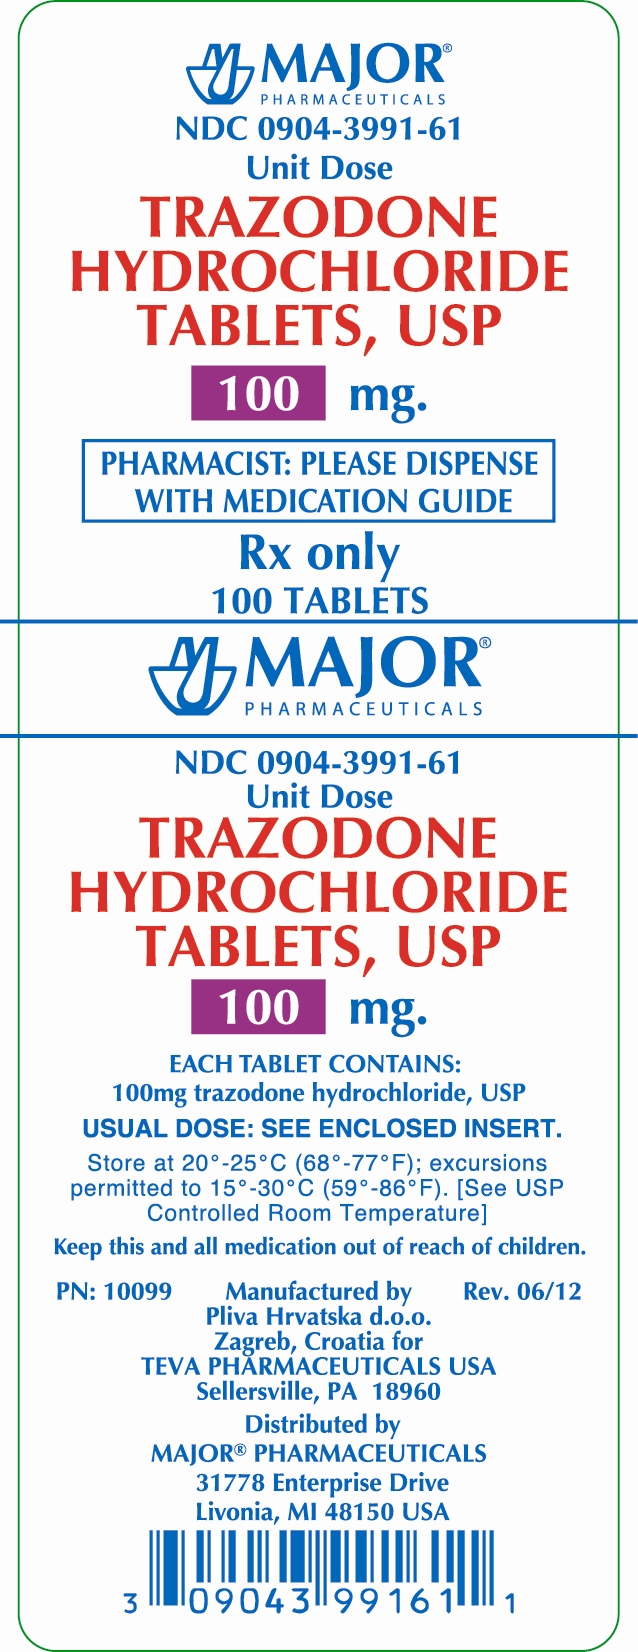 TRAZODONE HYDROCHLORIDE TABLETS, USP 100MG